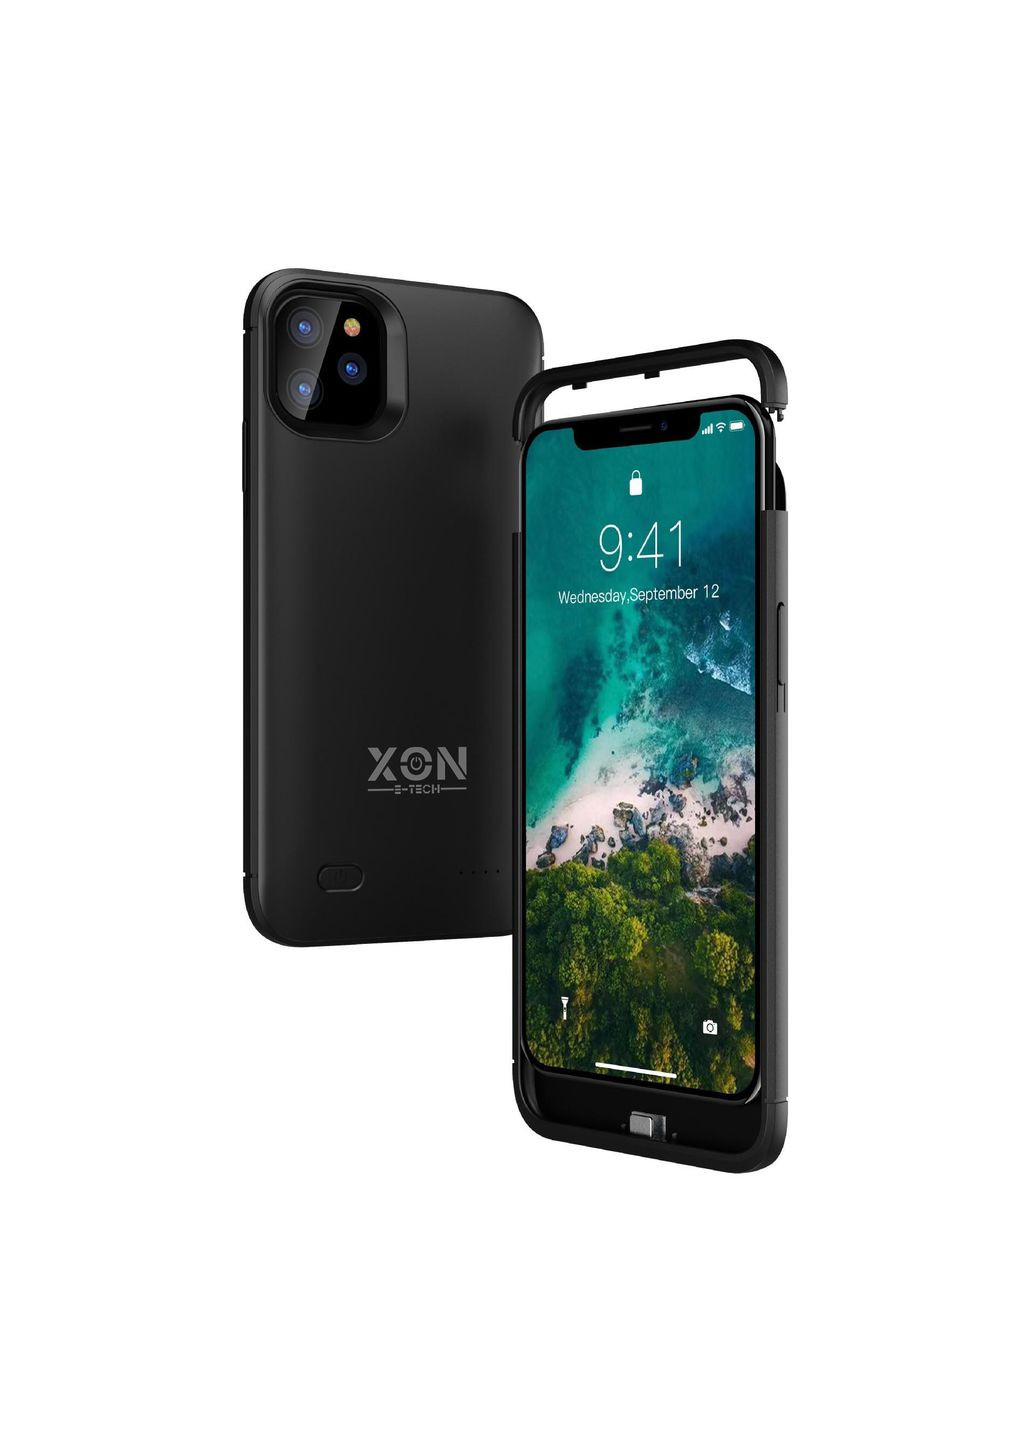 Чохол-акумулятор XON PowerCase для iPhone 11 Pro Max 6200 mAh Black XON E-Tech (293242225)